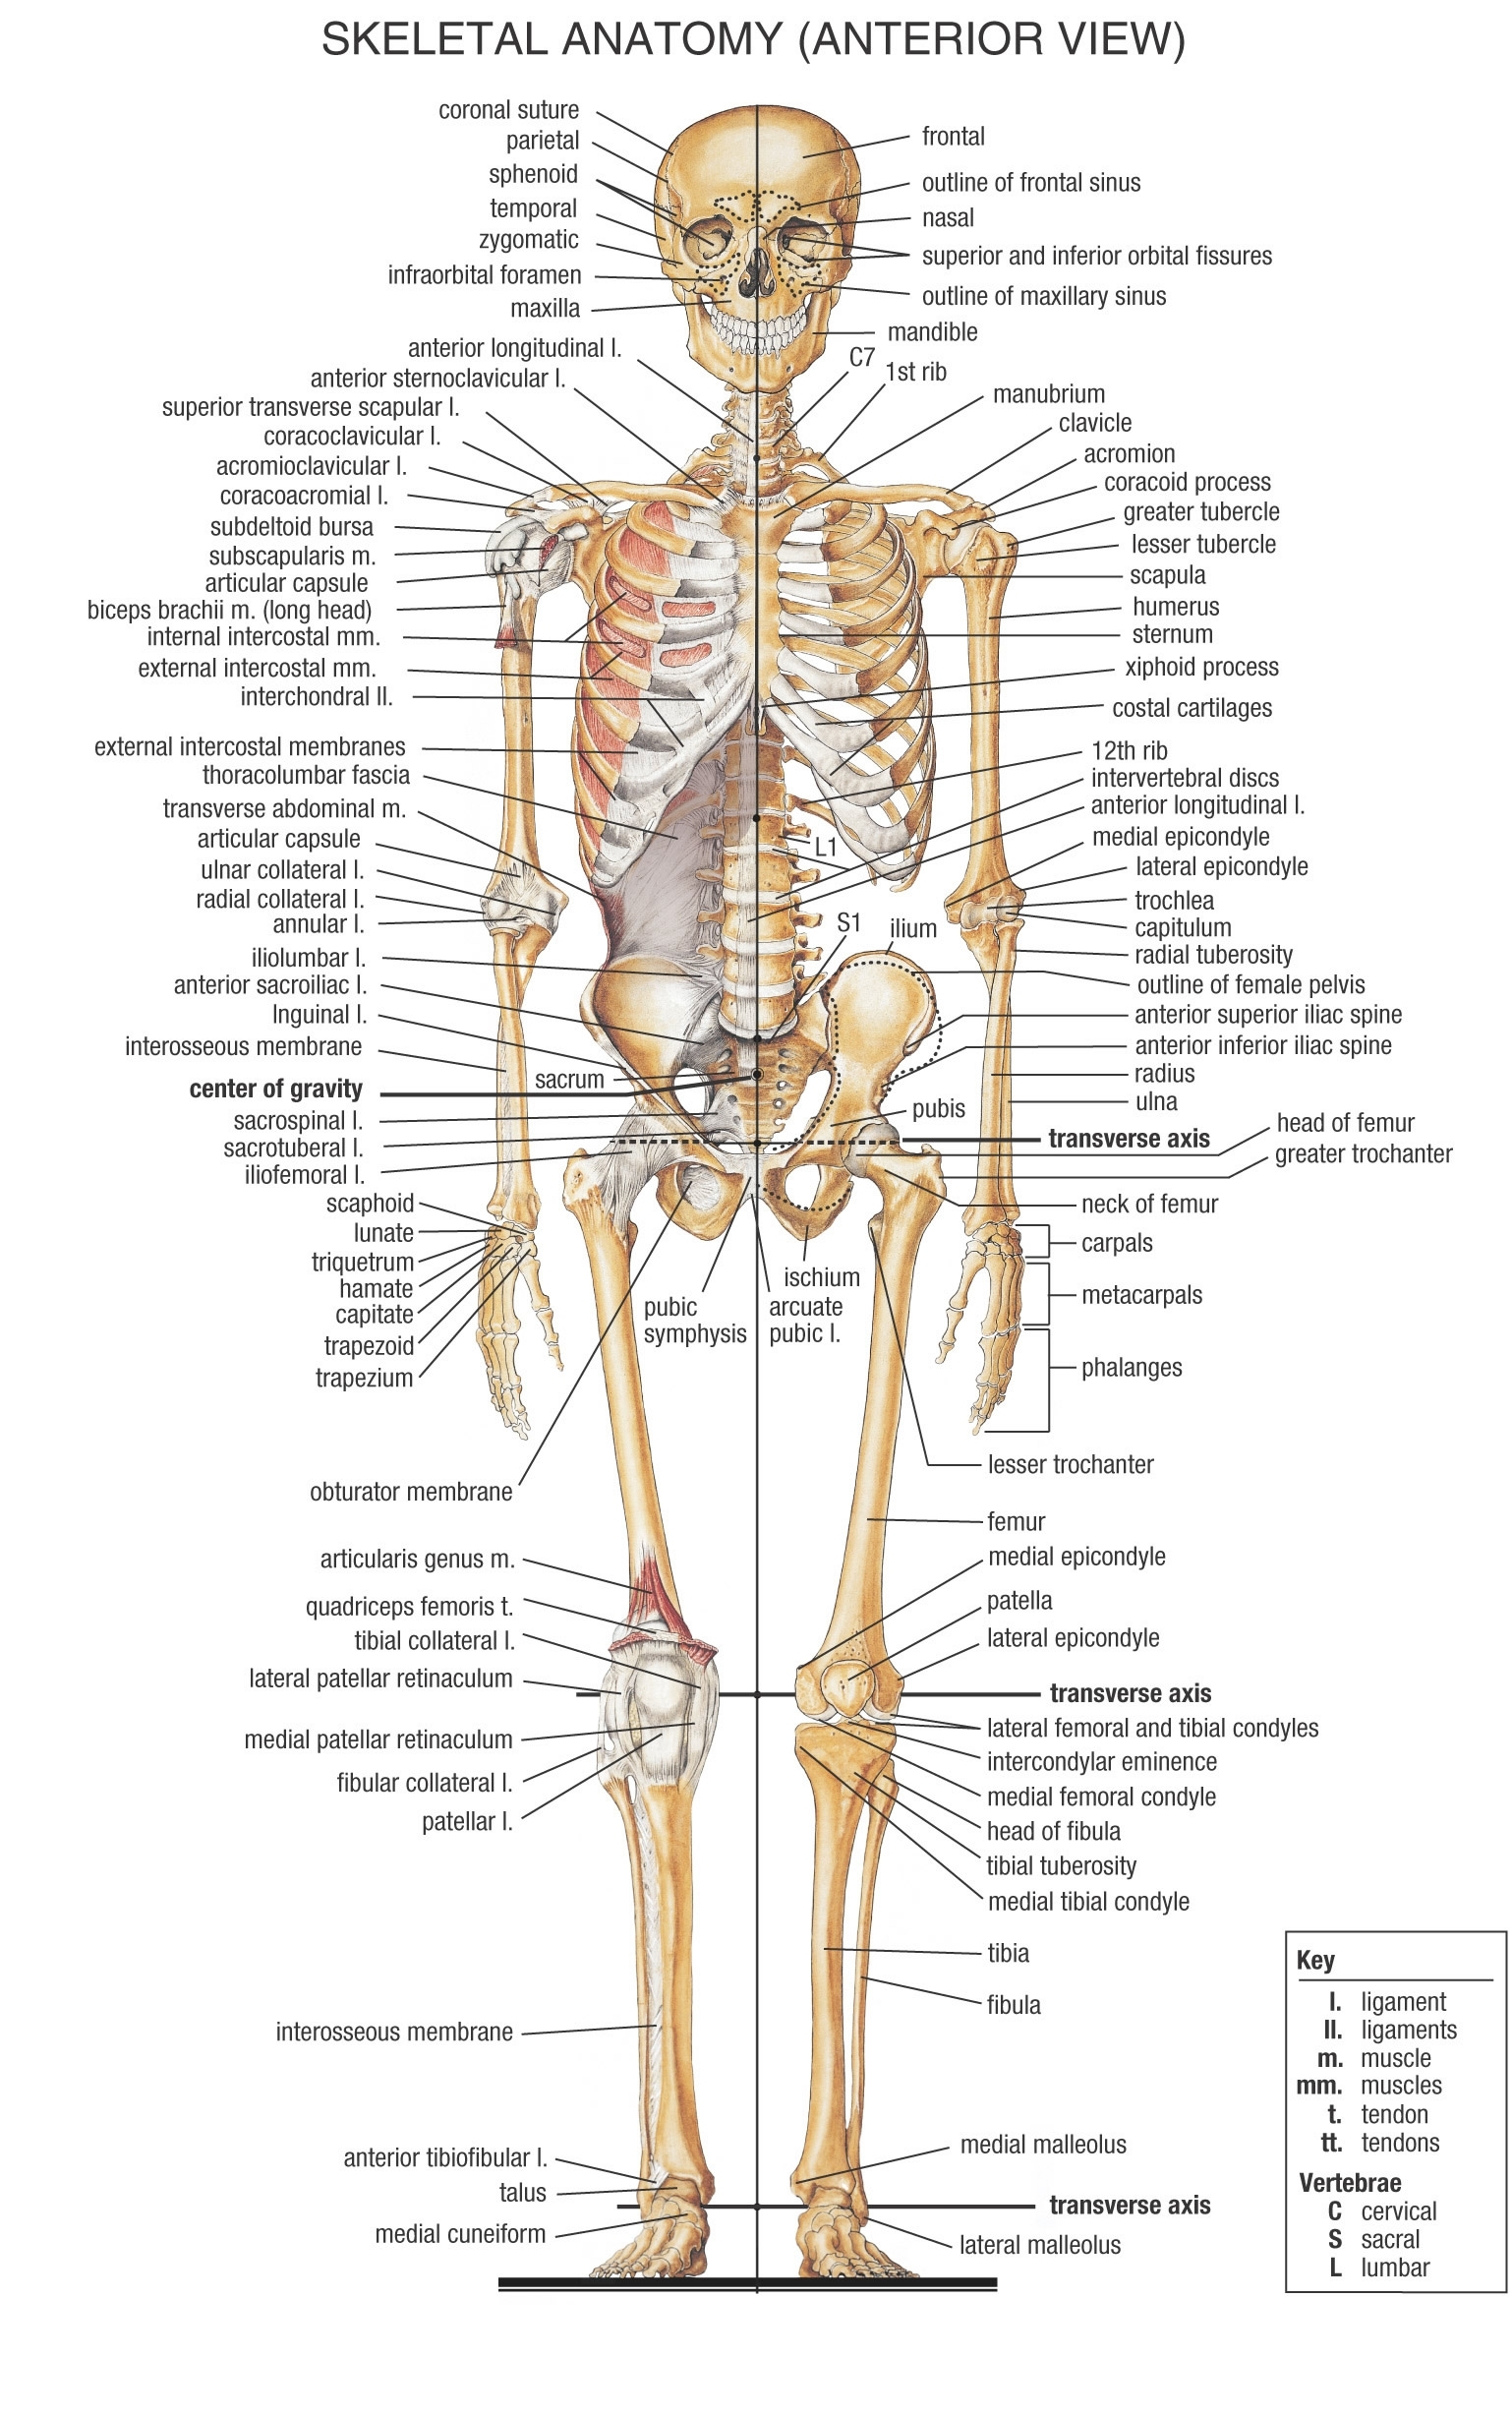 anatomy human